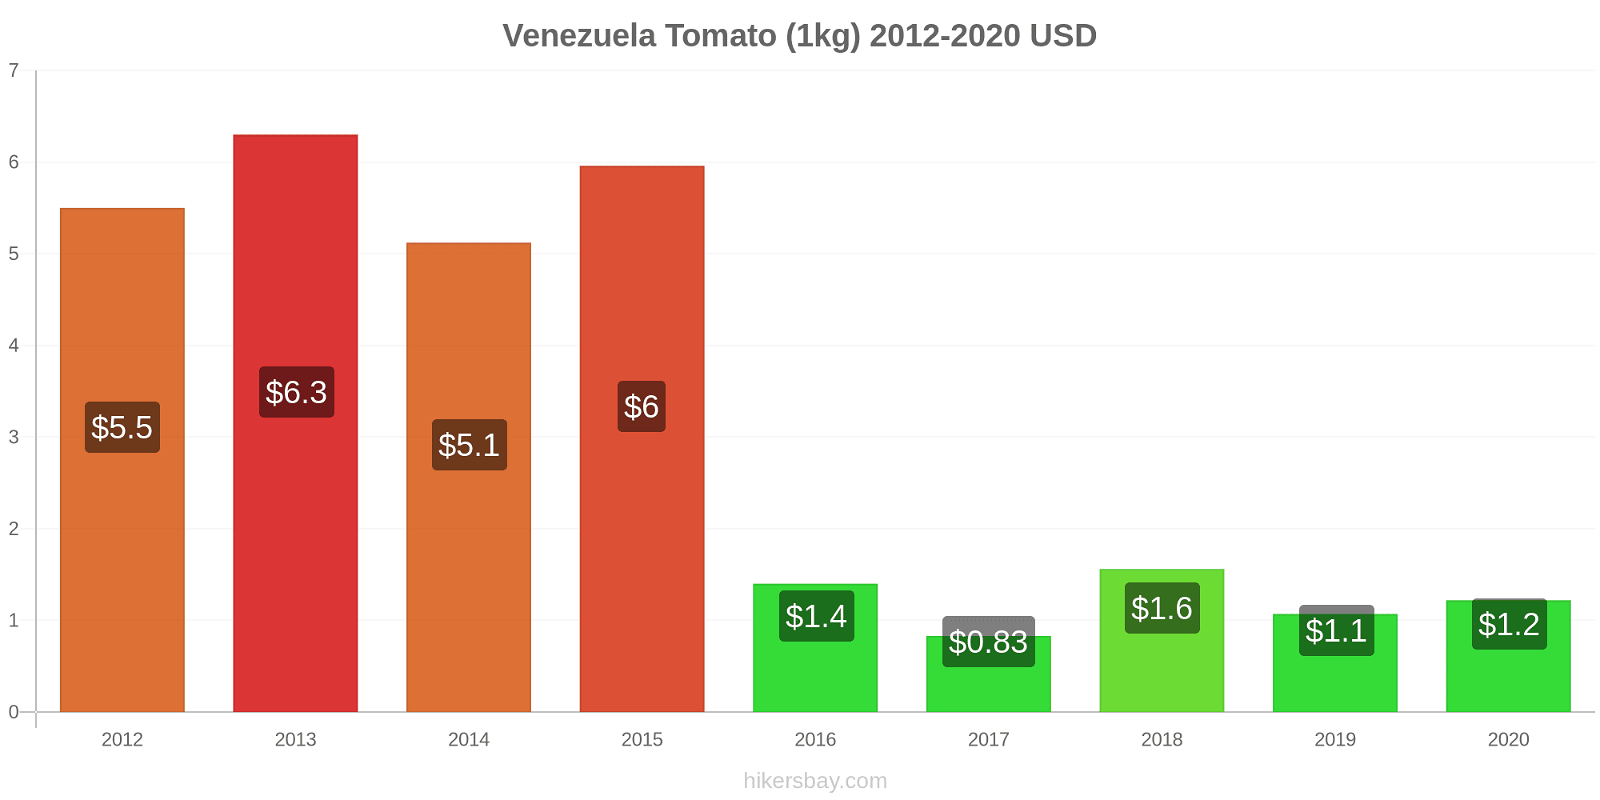 Venezuela price changes Tomato (1kg) hikersbay.com